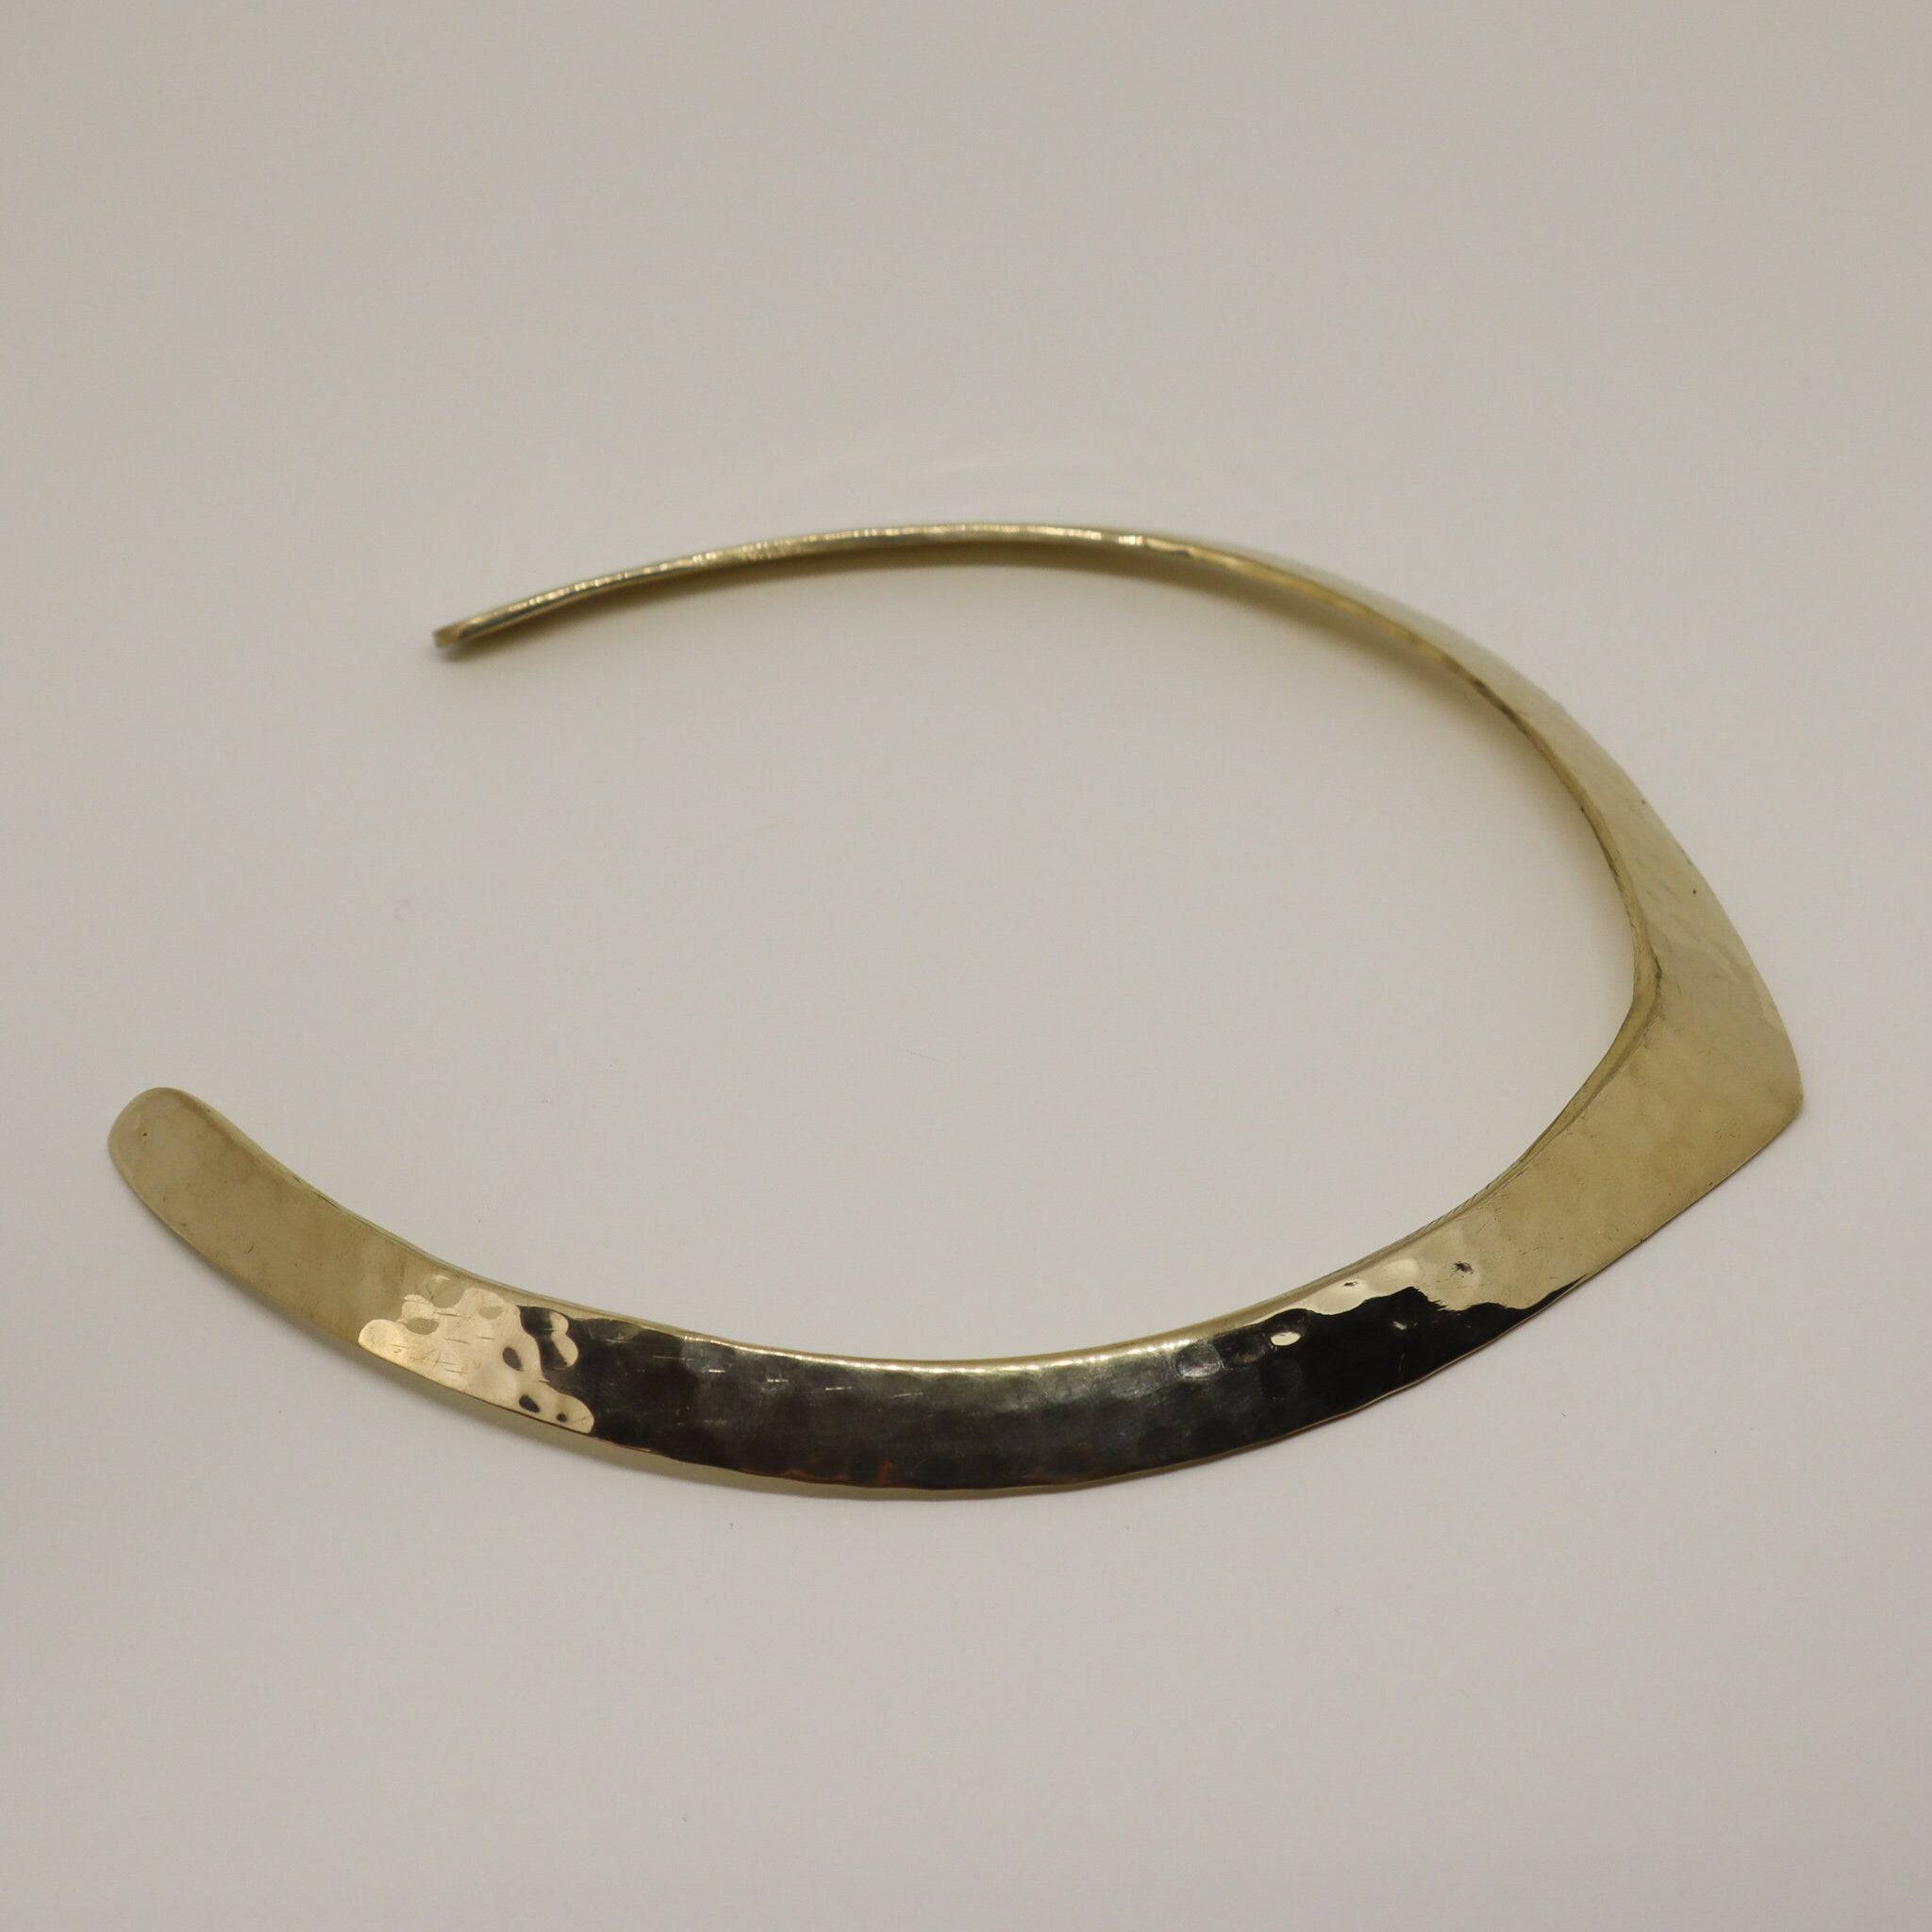 Chevron Halskette goldfarben - V-förmiger Choker Kette aus Messing handgefertigt - NooeBerlin